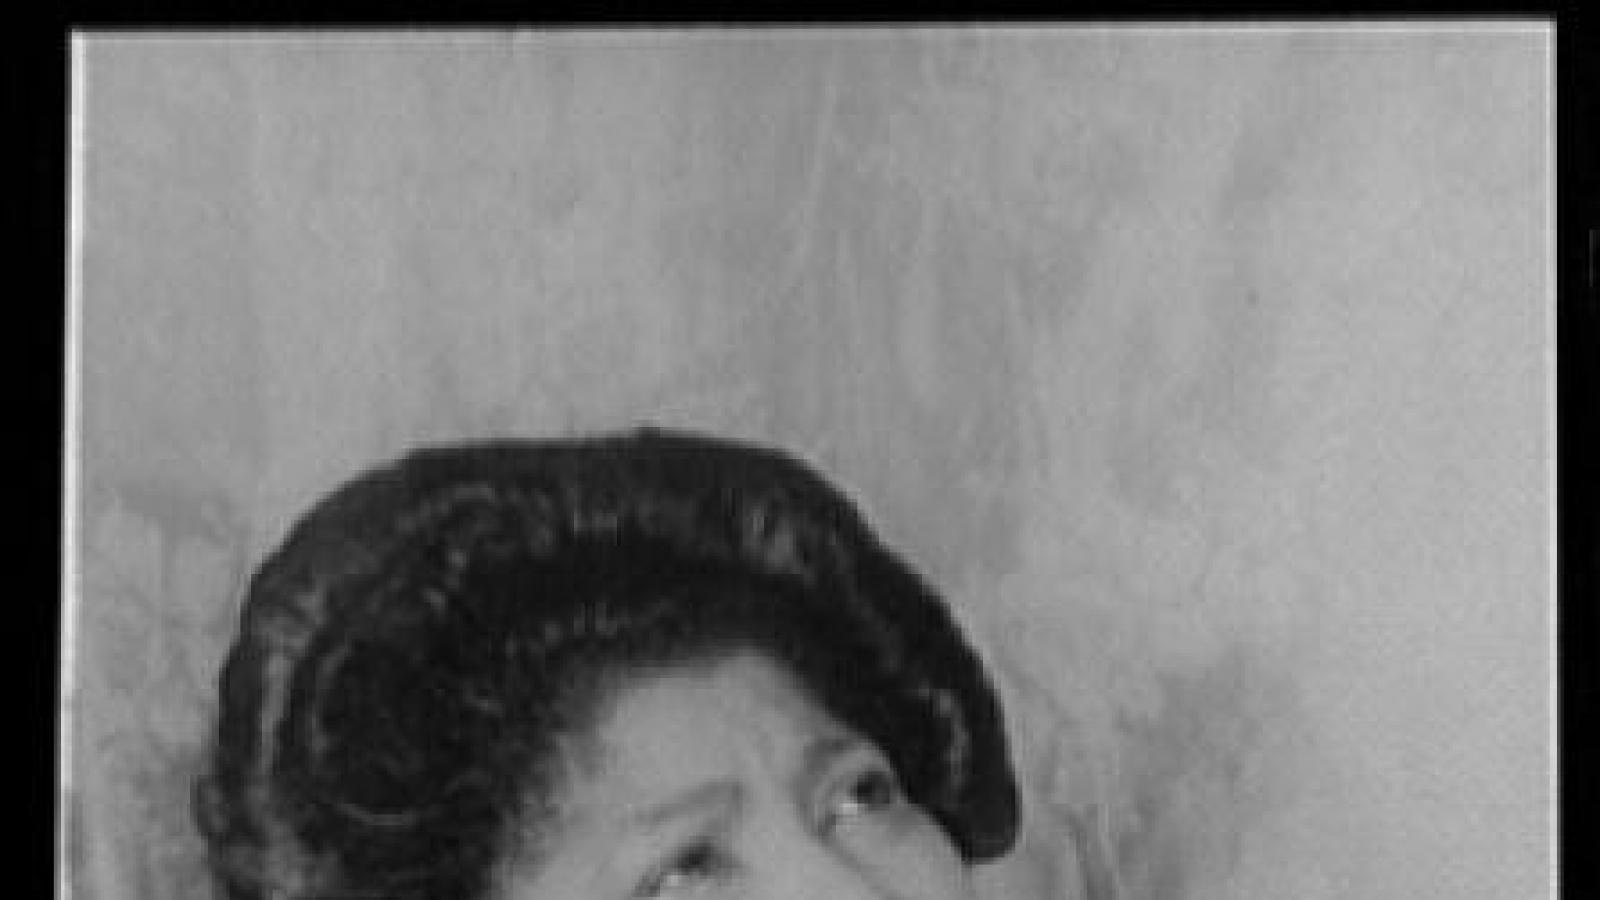 Black and white photograph of gospel singer Mahalia Jackson